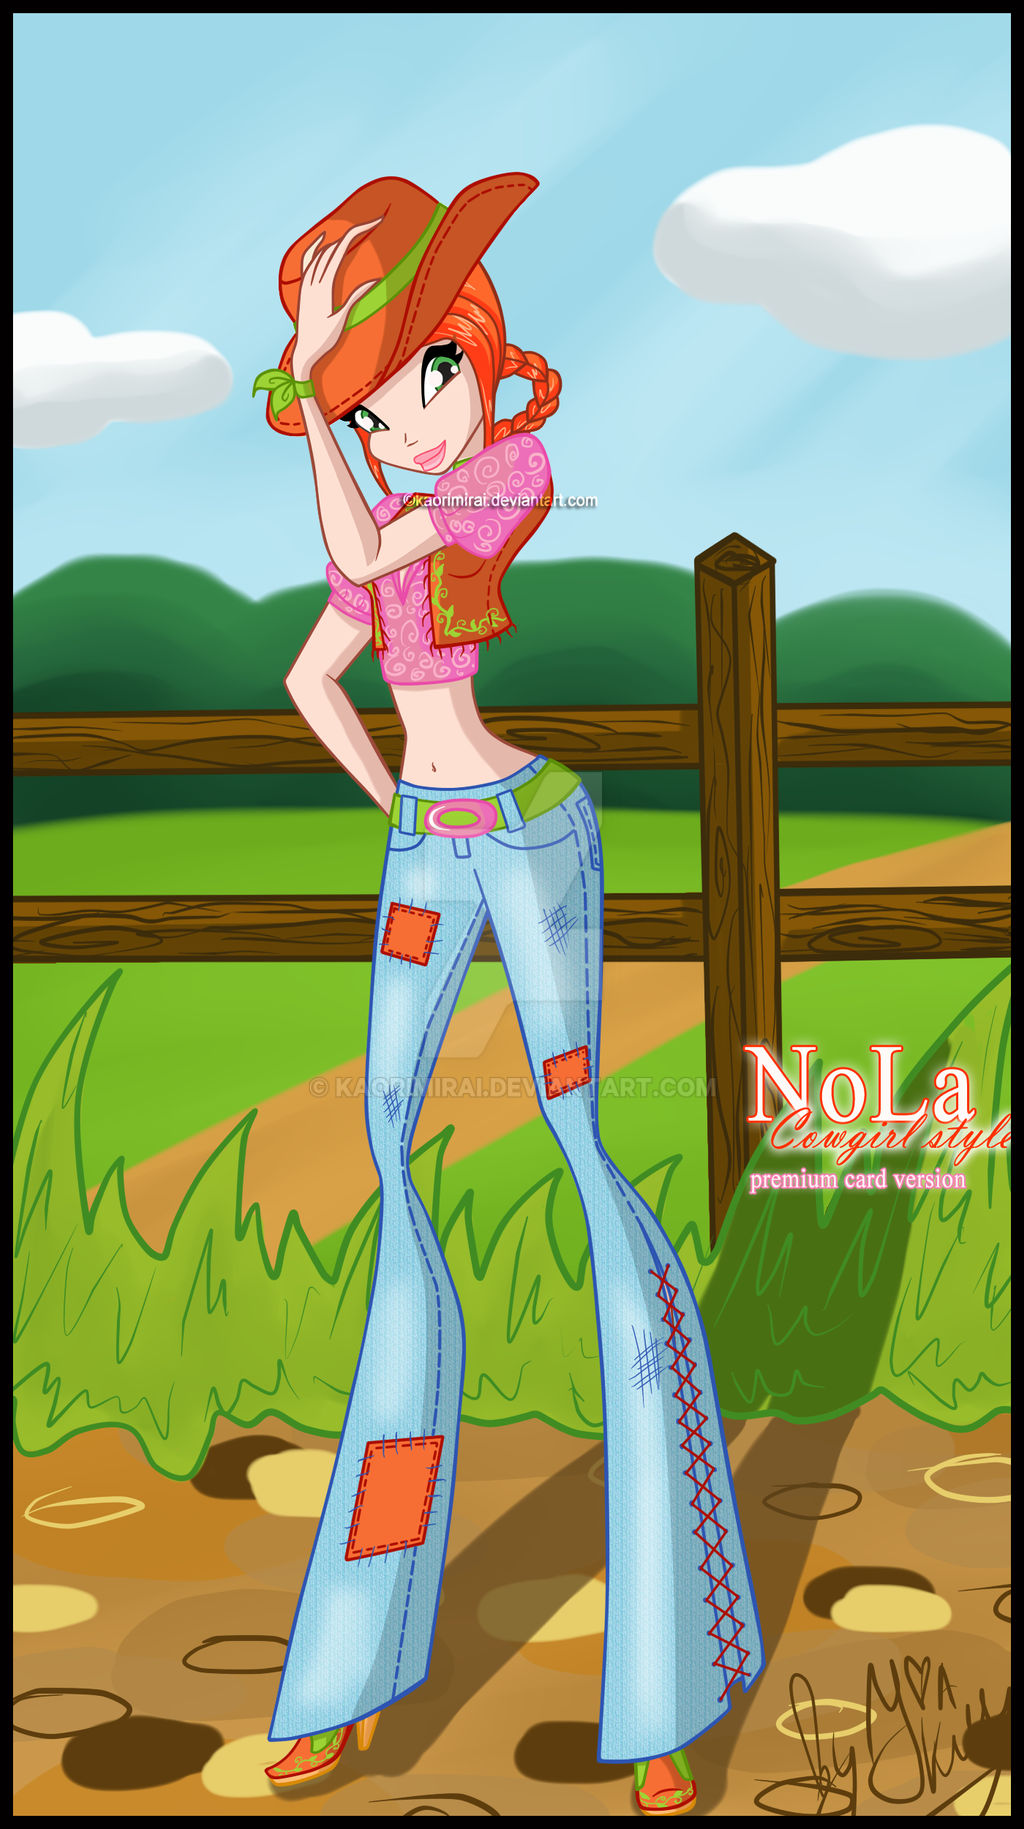 NoLa Cowgirl style+Card+